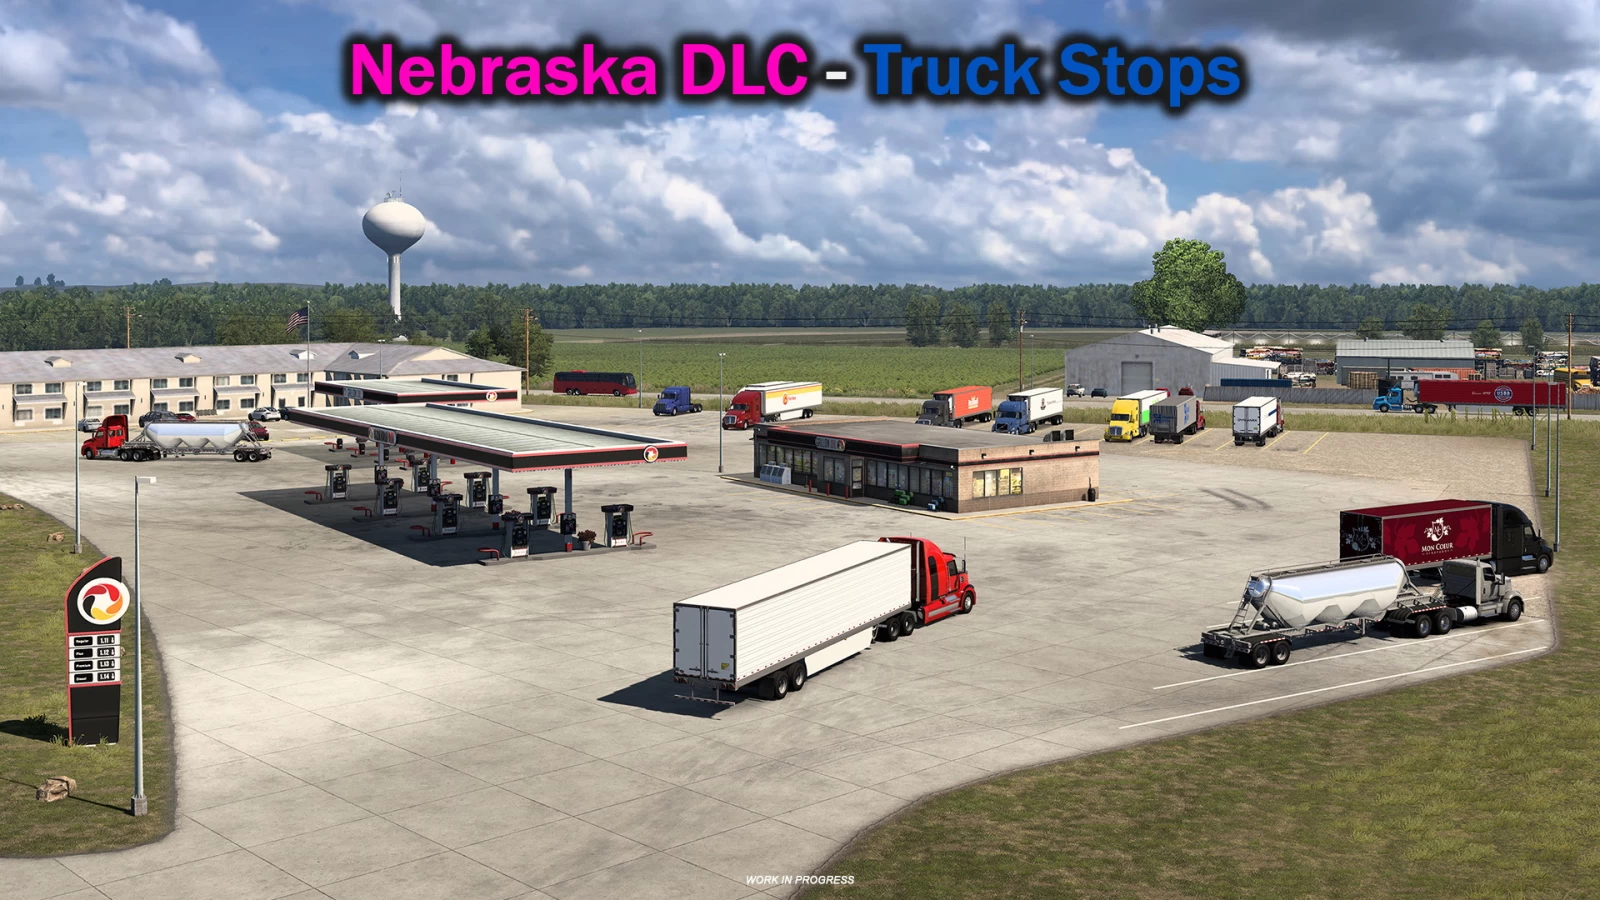 Nebraska DLC - Truck Stops in American Truck Simulator